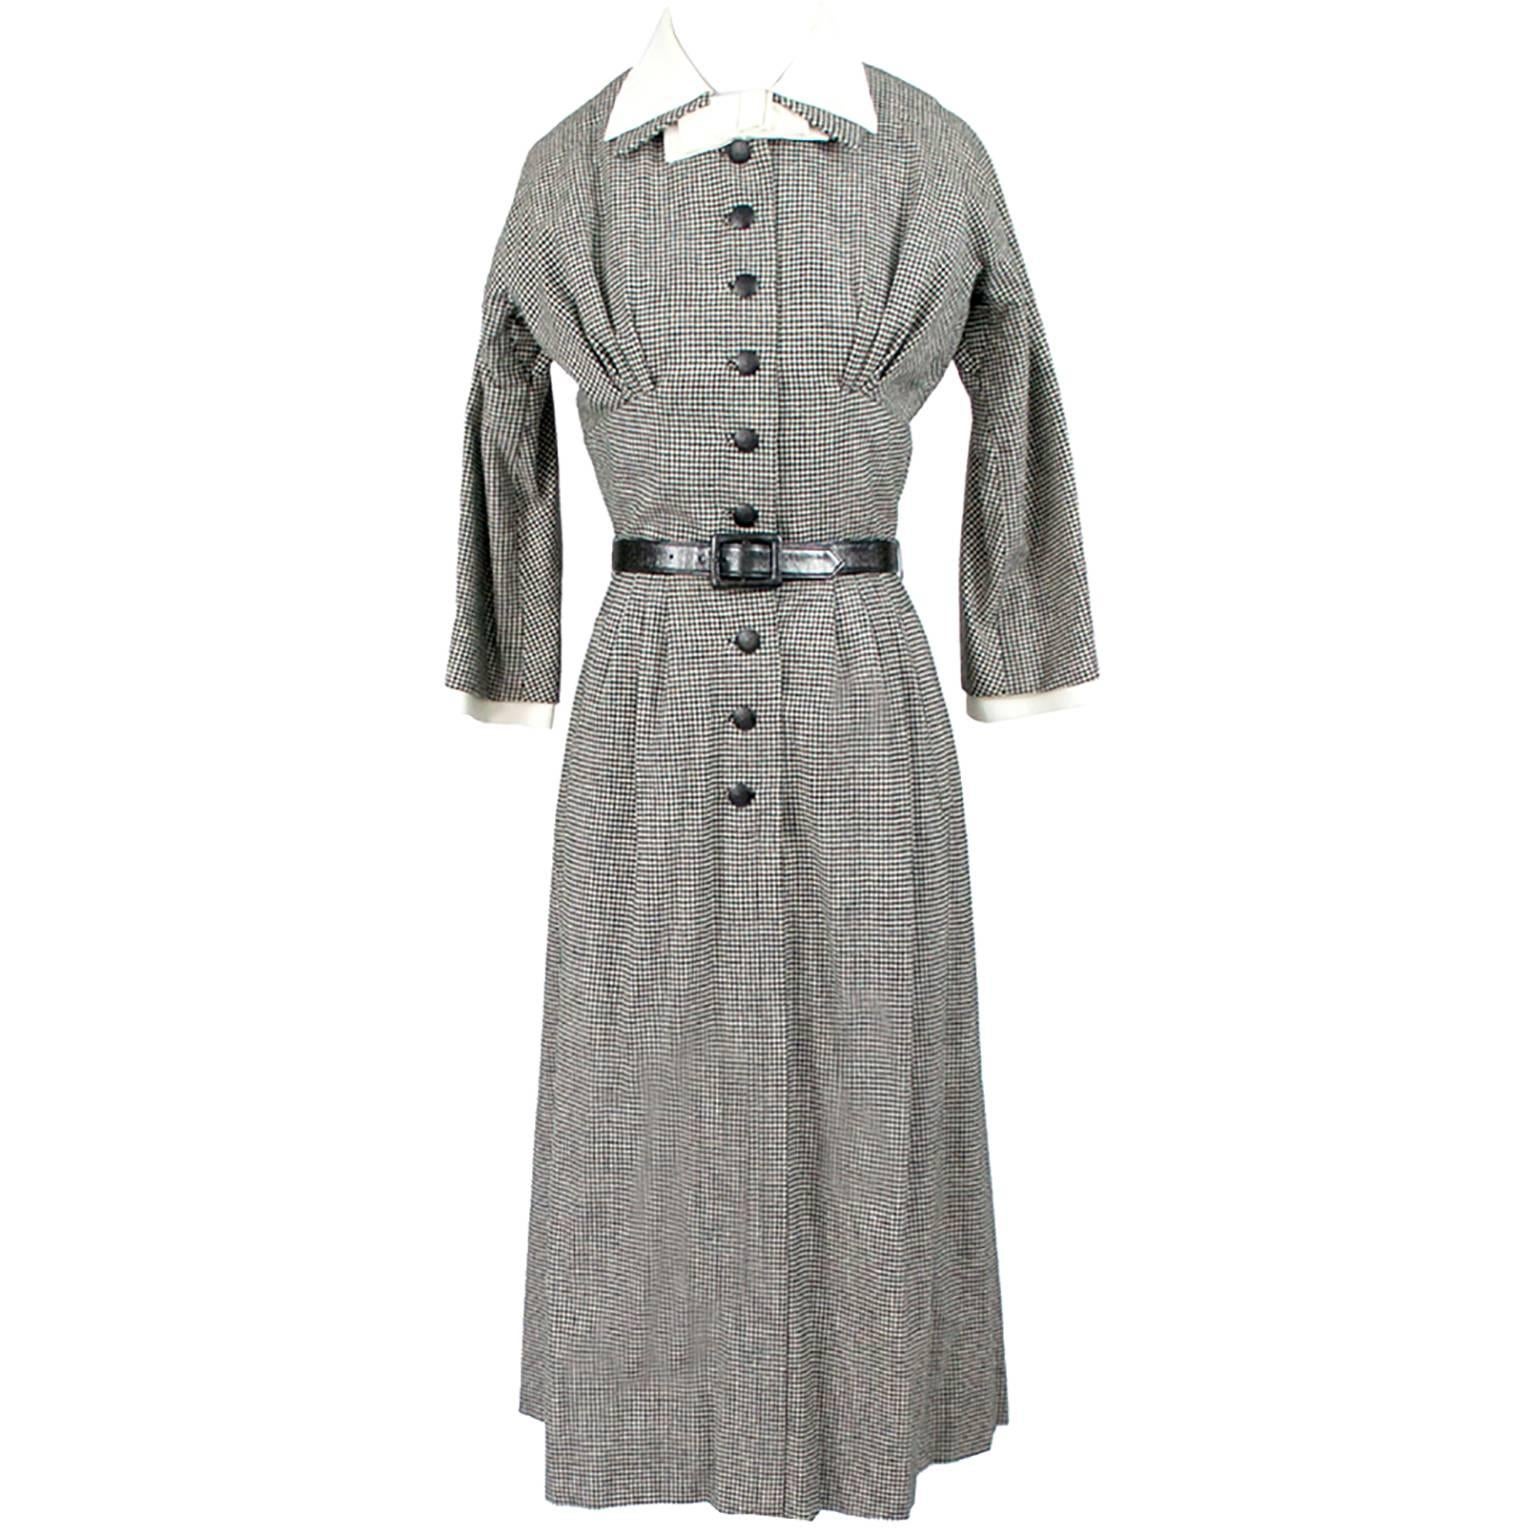 Mollie Parnis VIntage Dress 1951 Documented Hapers Bazaar Black White Check